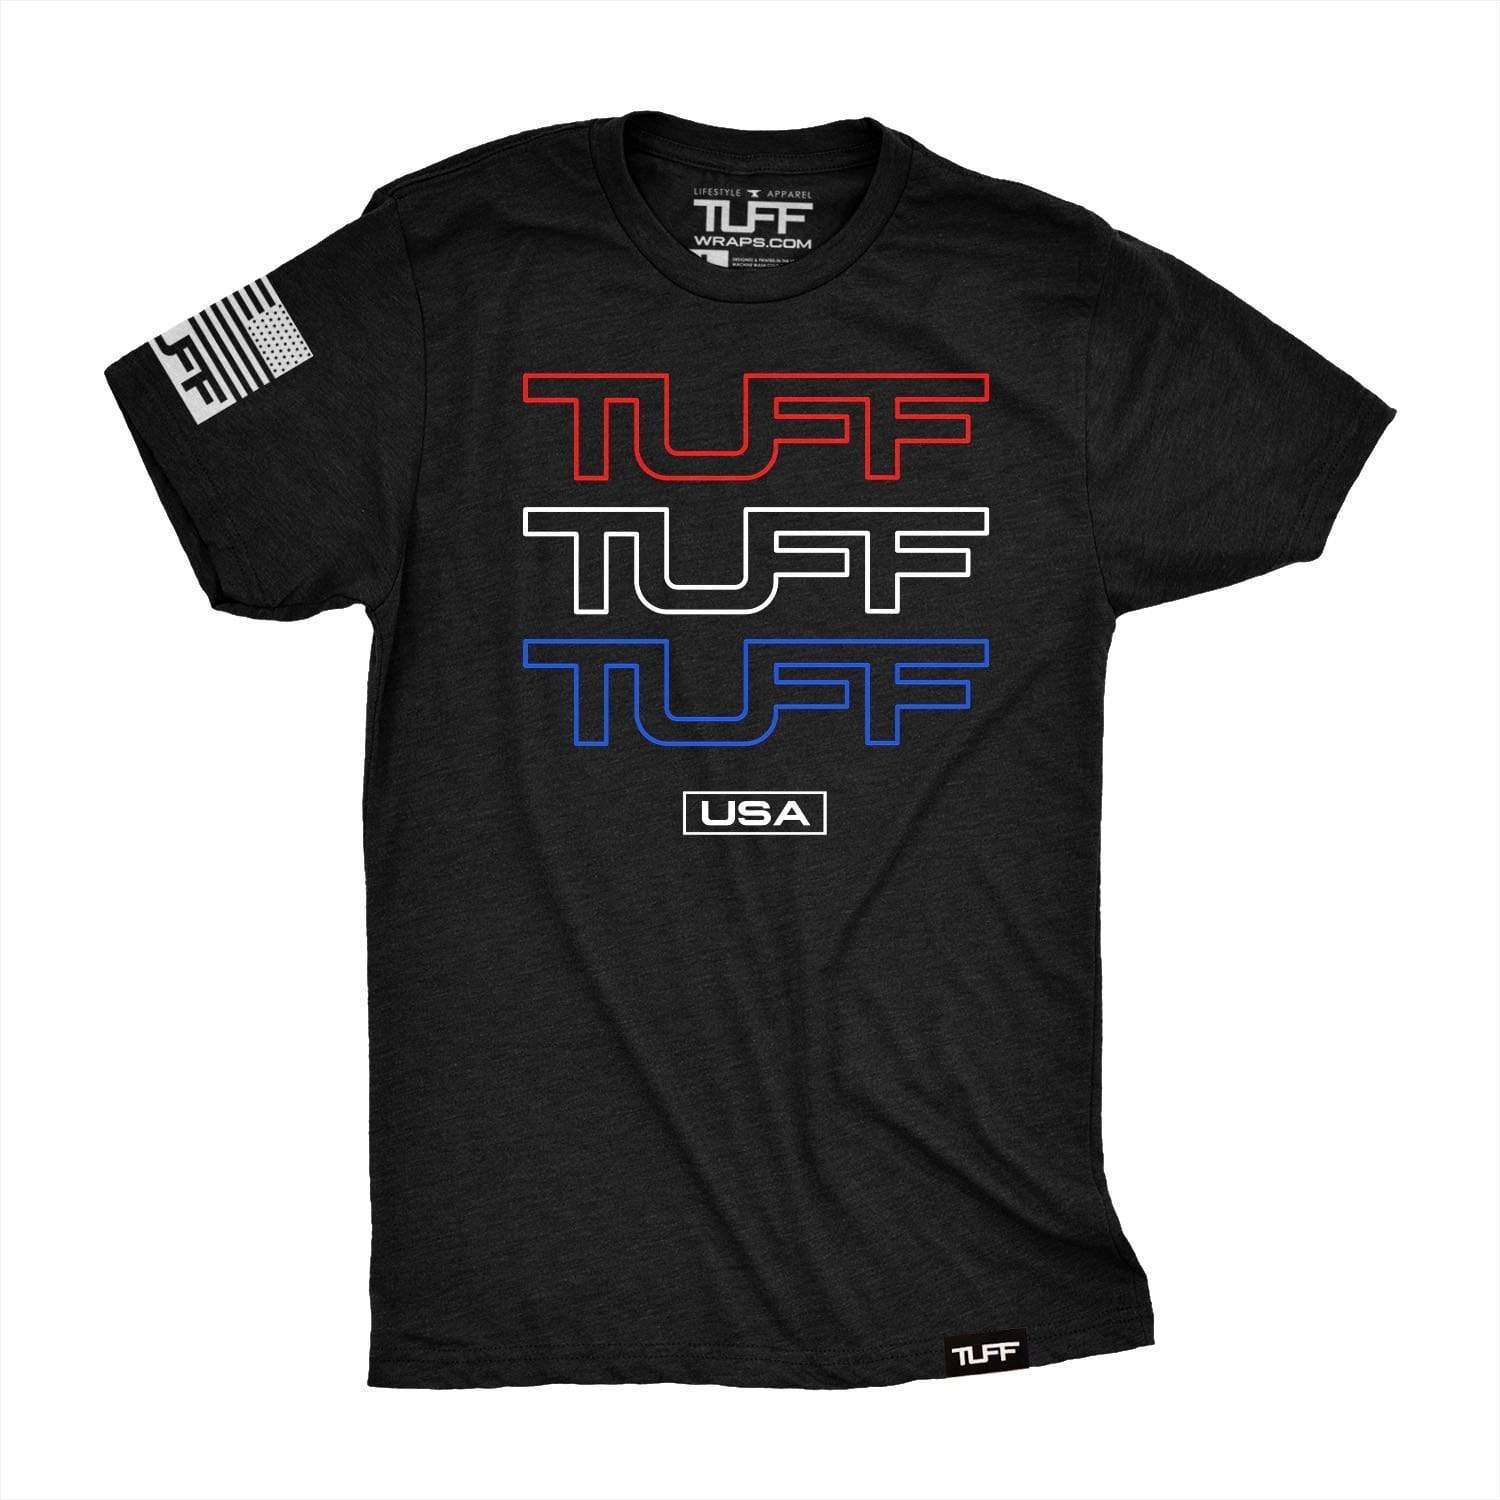 Triple TUFF USA Tee S / Black TuffWraps.com